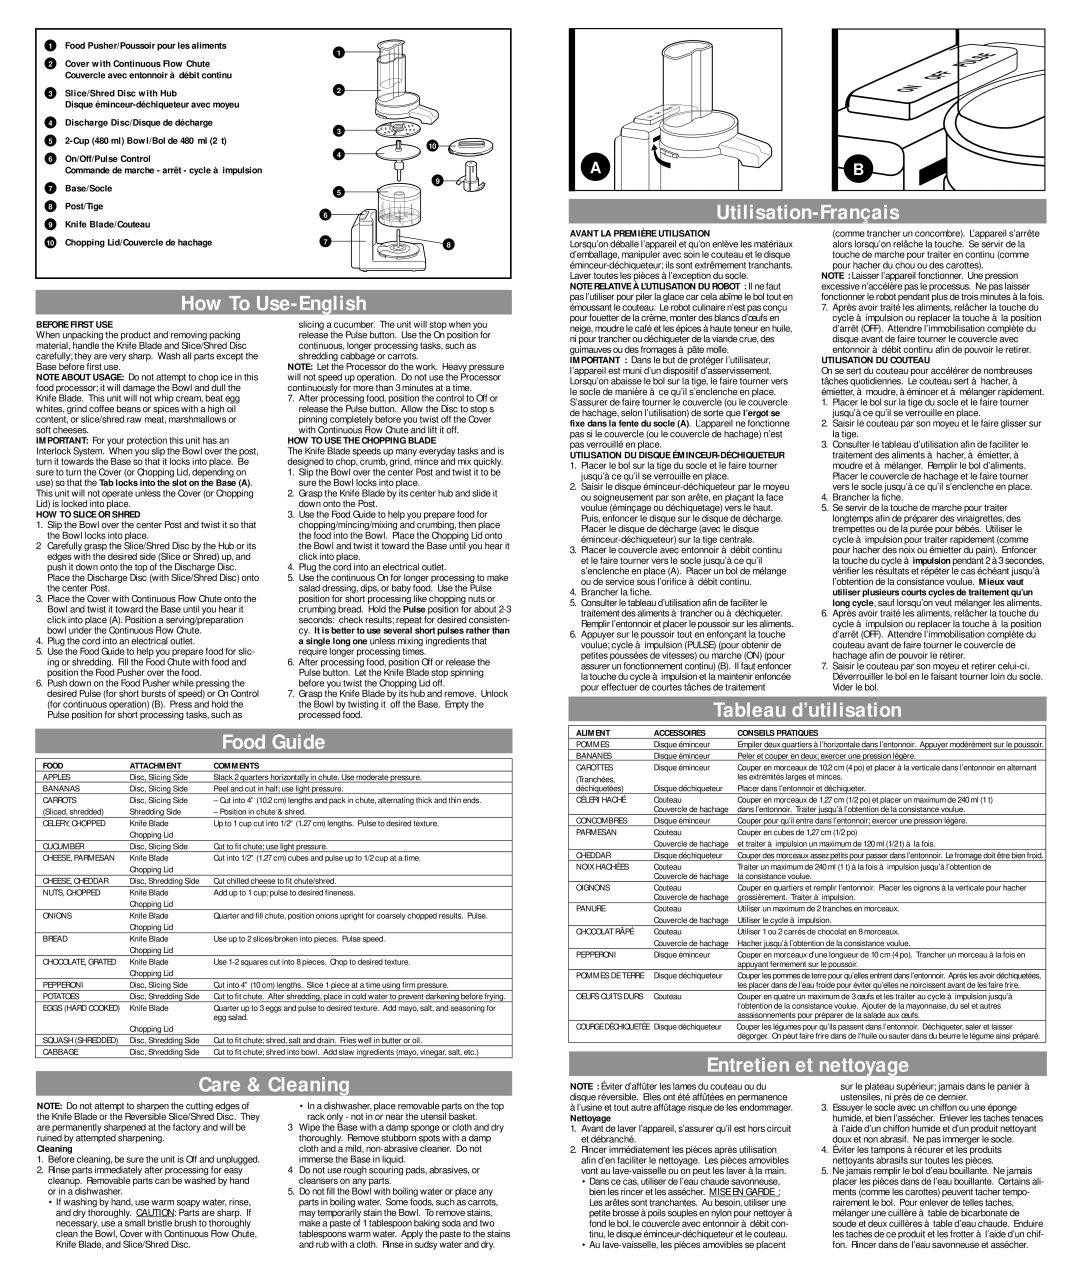 Black & Decker HMP60 warranty Utilisation-Français, How To Use-English, Food Guide, Entretien et nettoyage, Care & Cleaning 